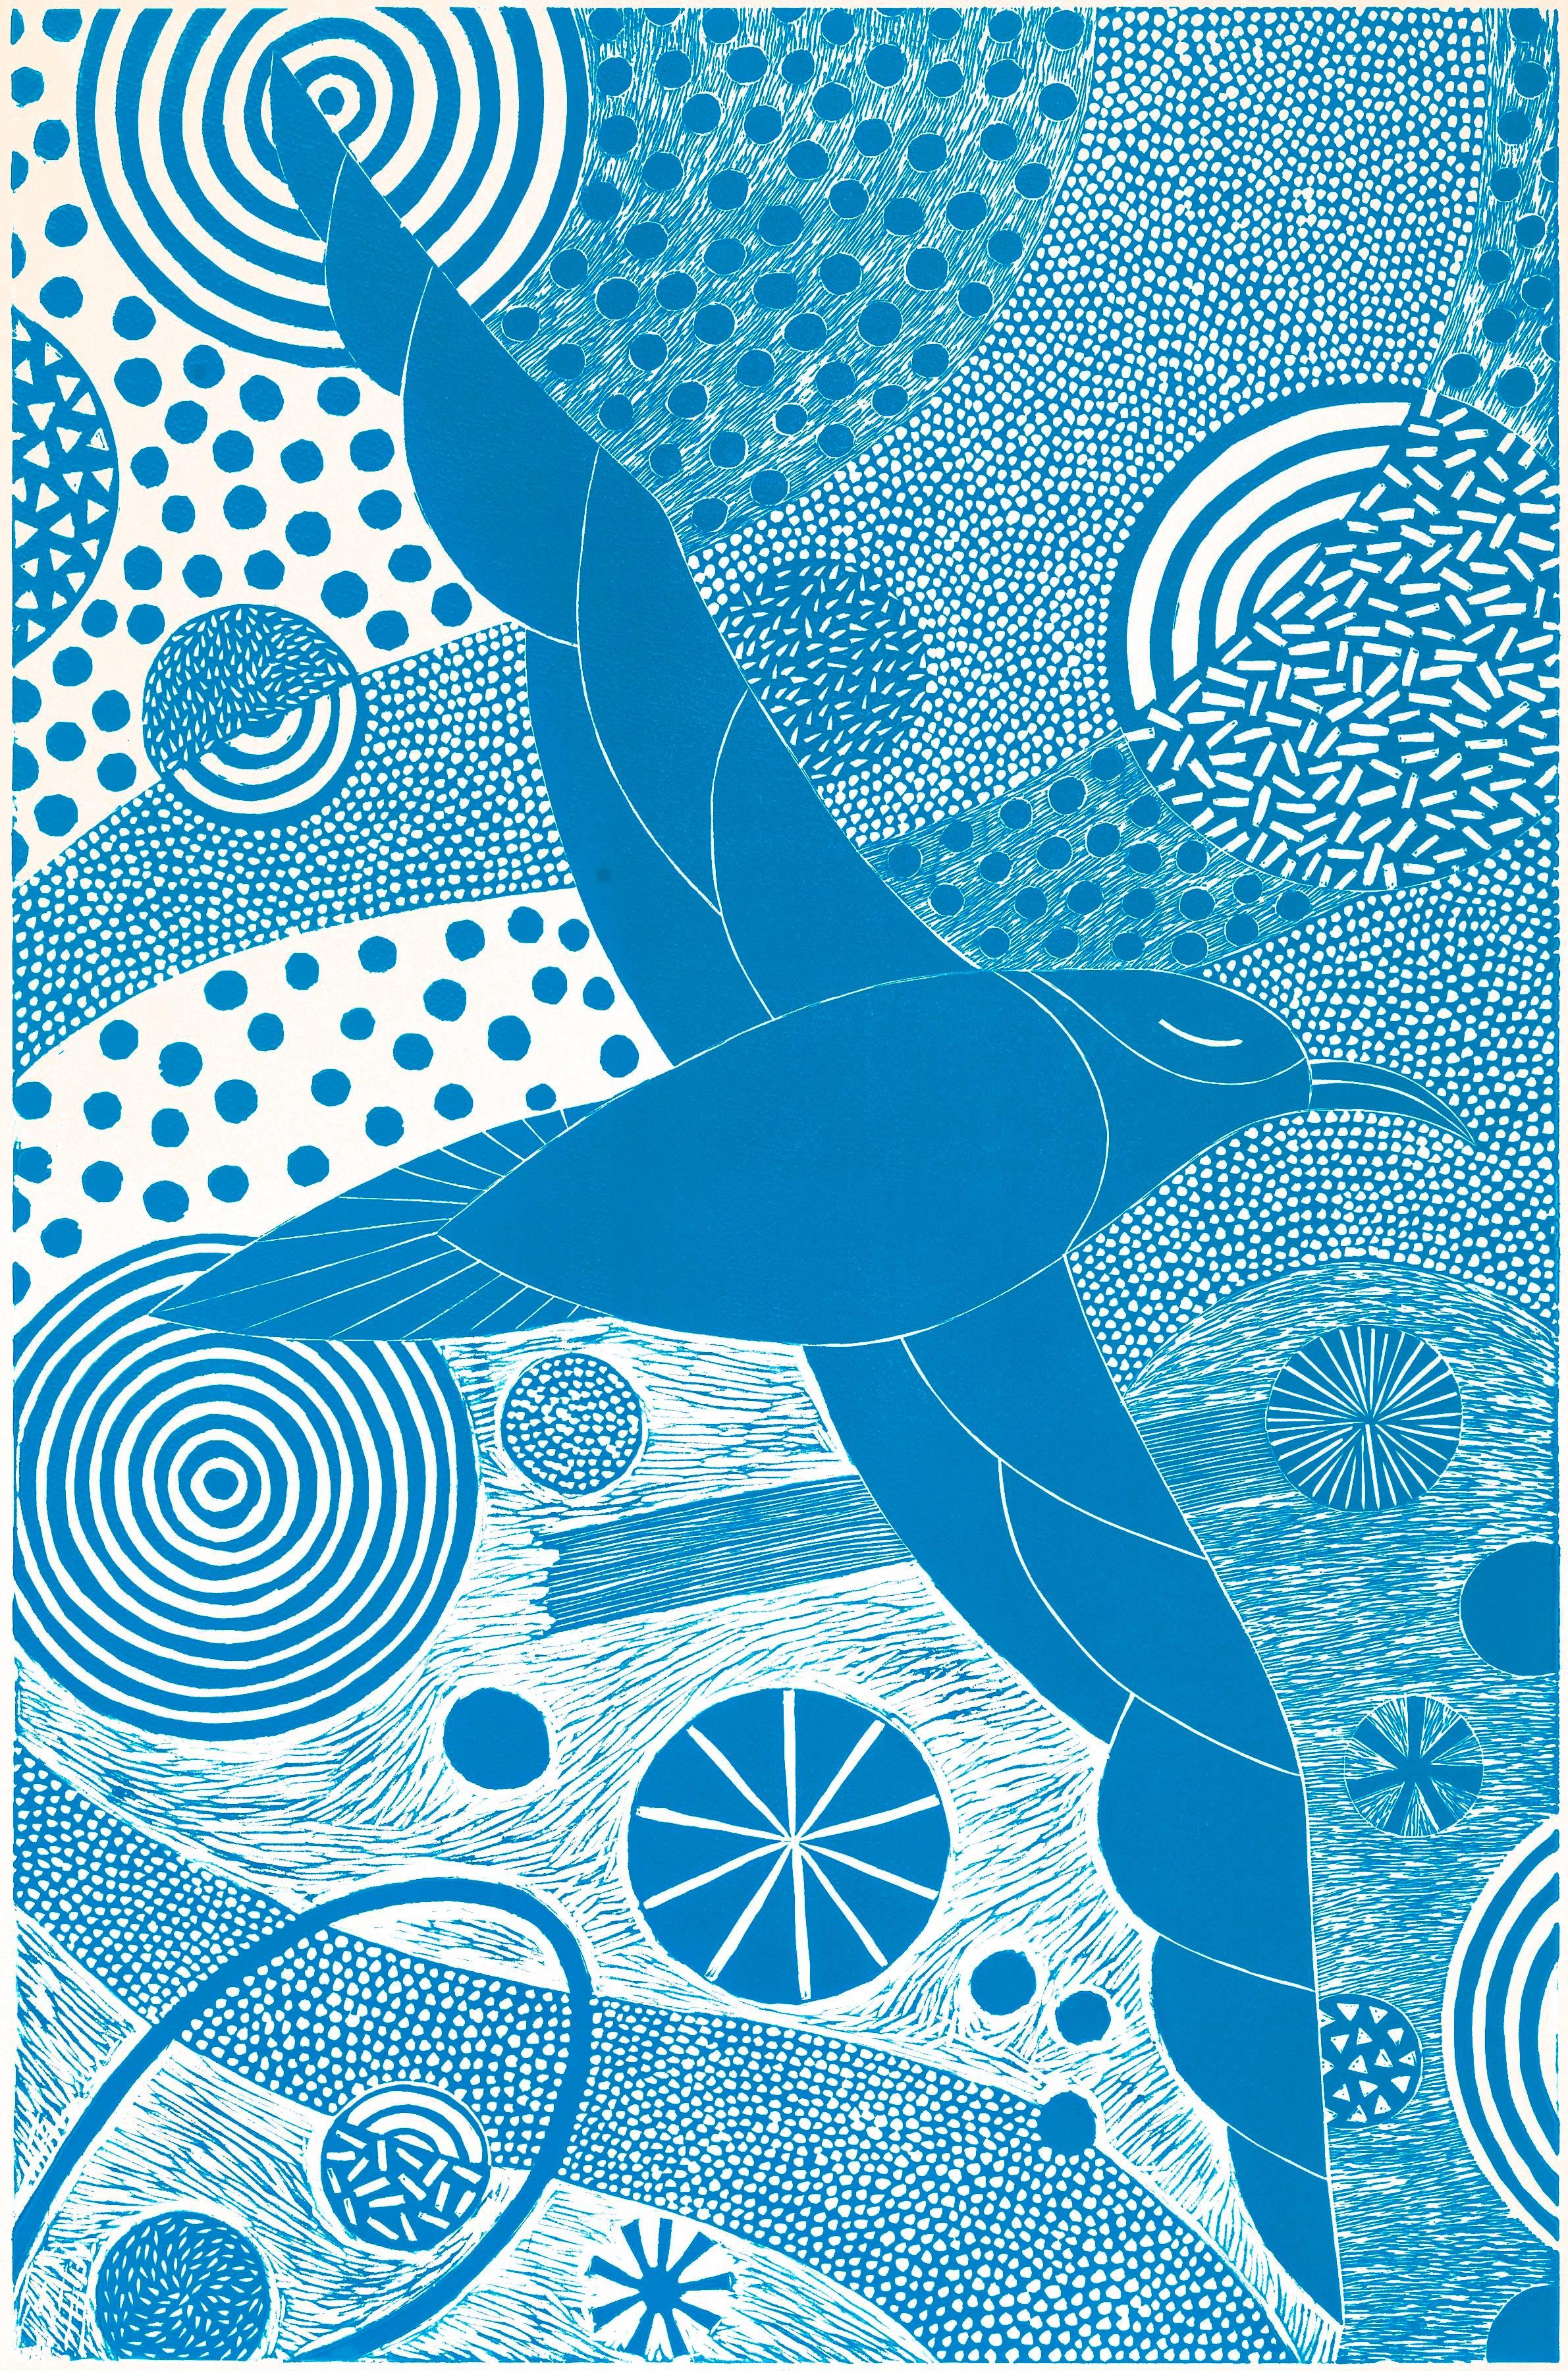 Animal Print Lisa Houck - « Flying and Fishing », impression de blocs de linoléum bleu d'inspiration folklorique représentant un oiseau en vol